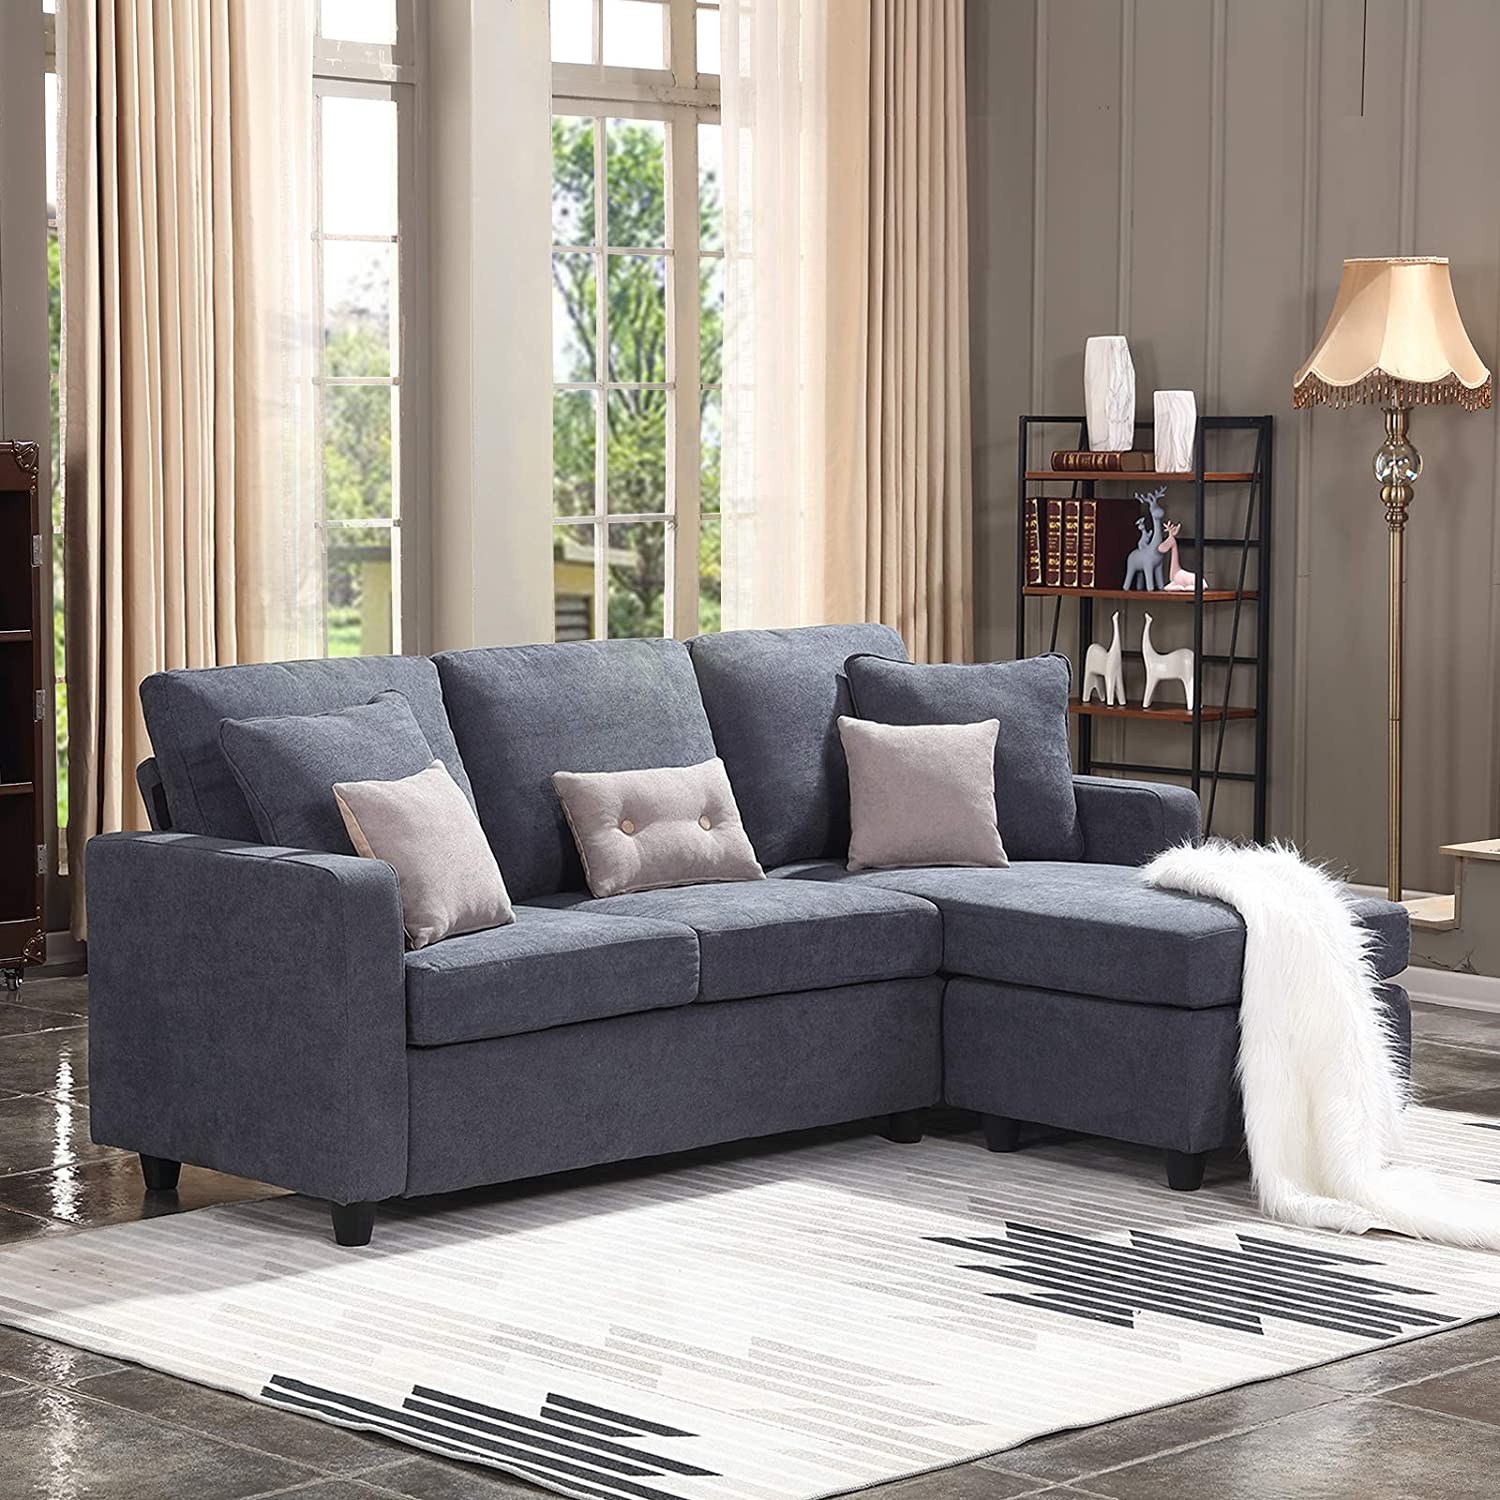 HONBAY L-Shaped Convertible Sectional Sofa